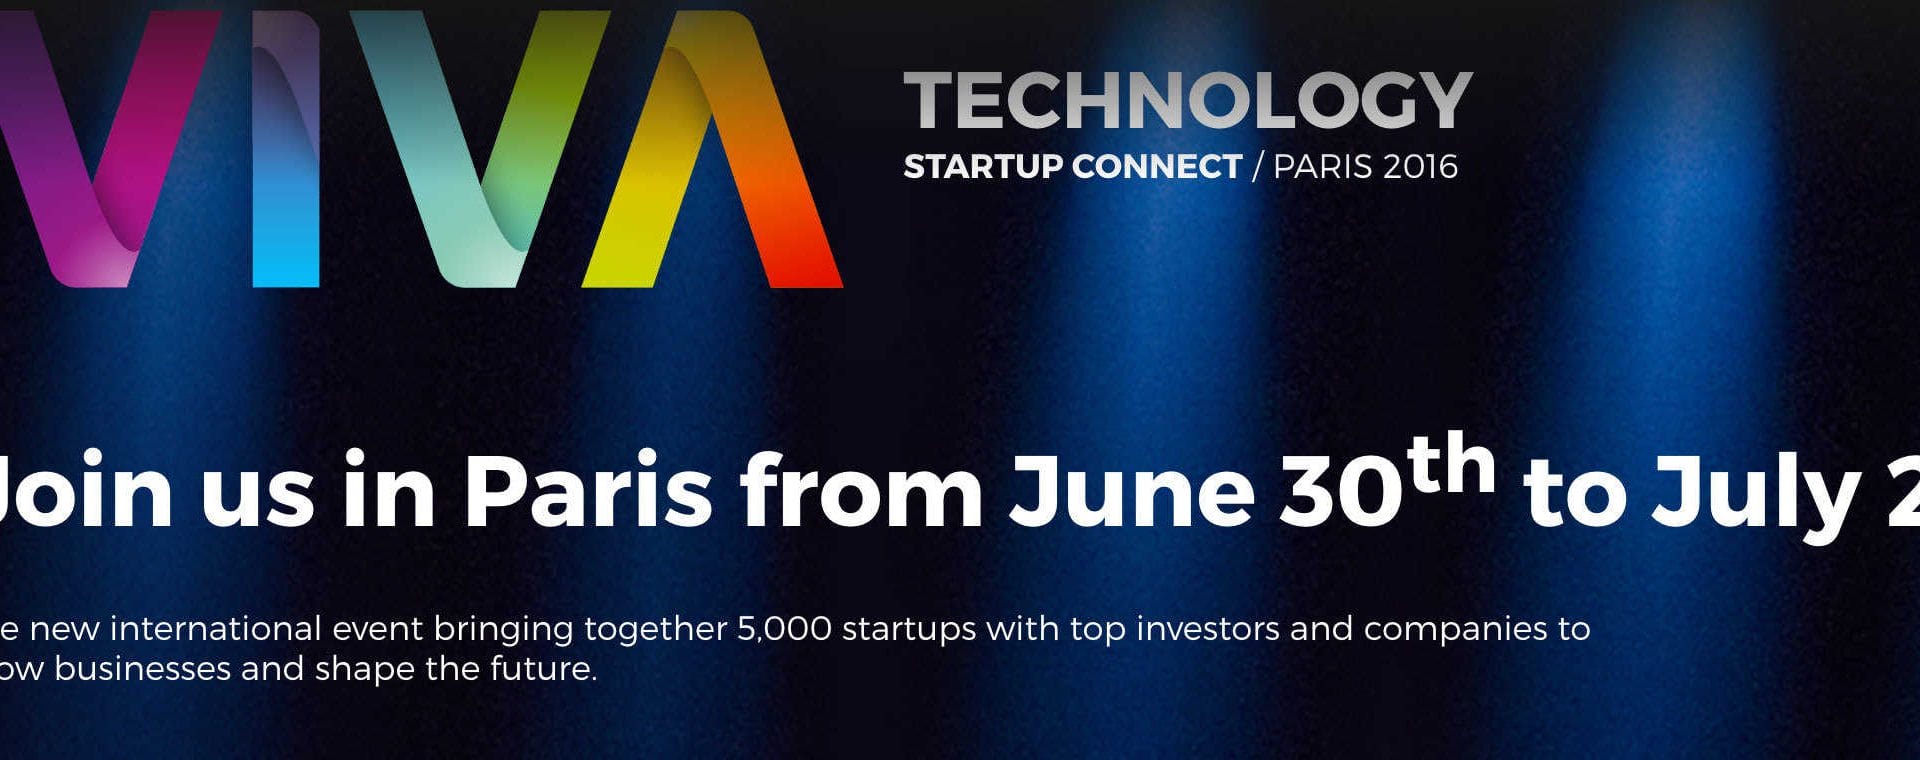 Viva-Technology-Paris